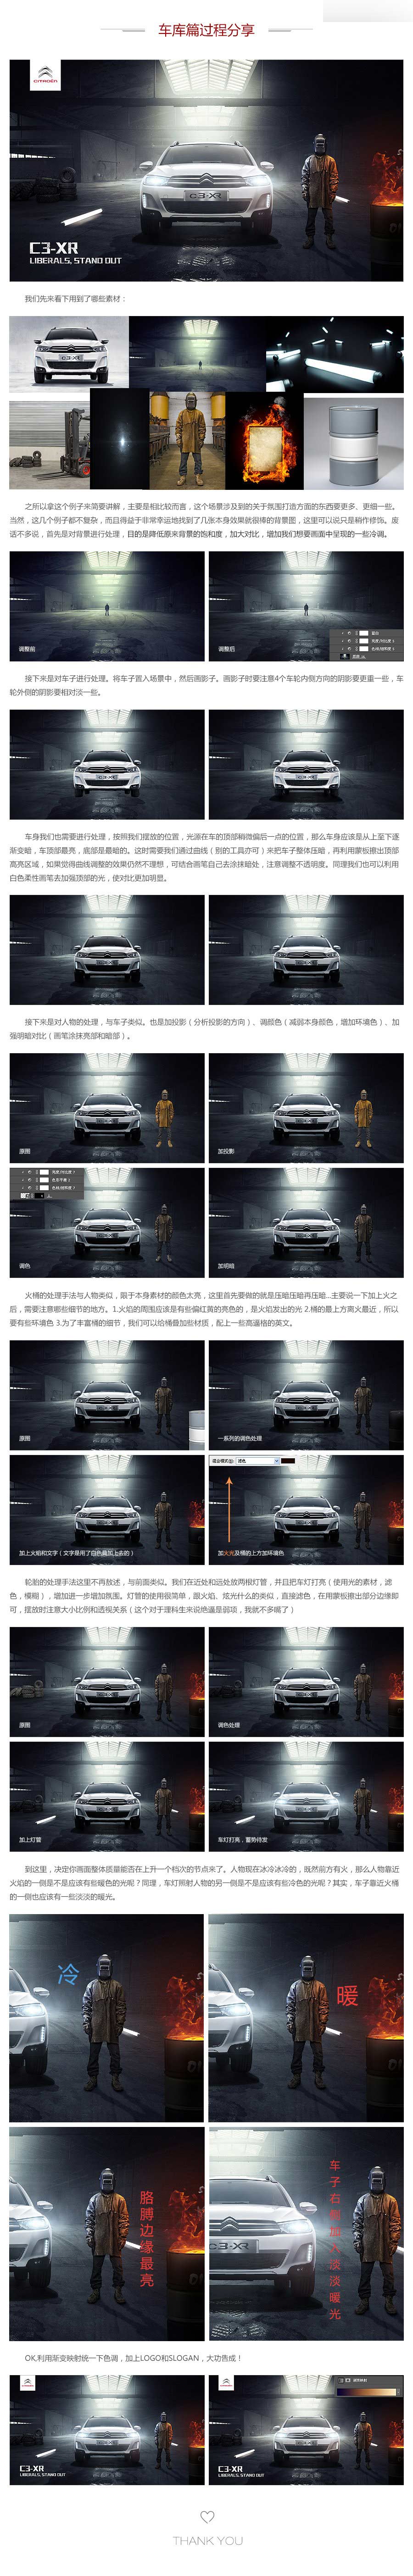 Photoshop设计时尚炫酷大气的雪铁龙C3-XR汽车海报